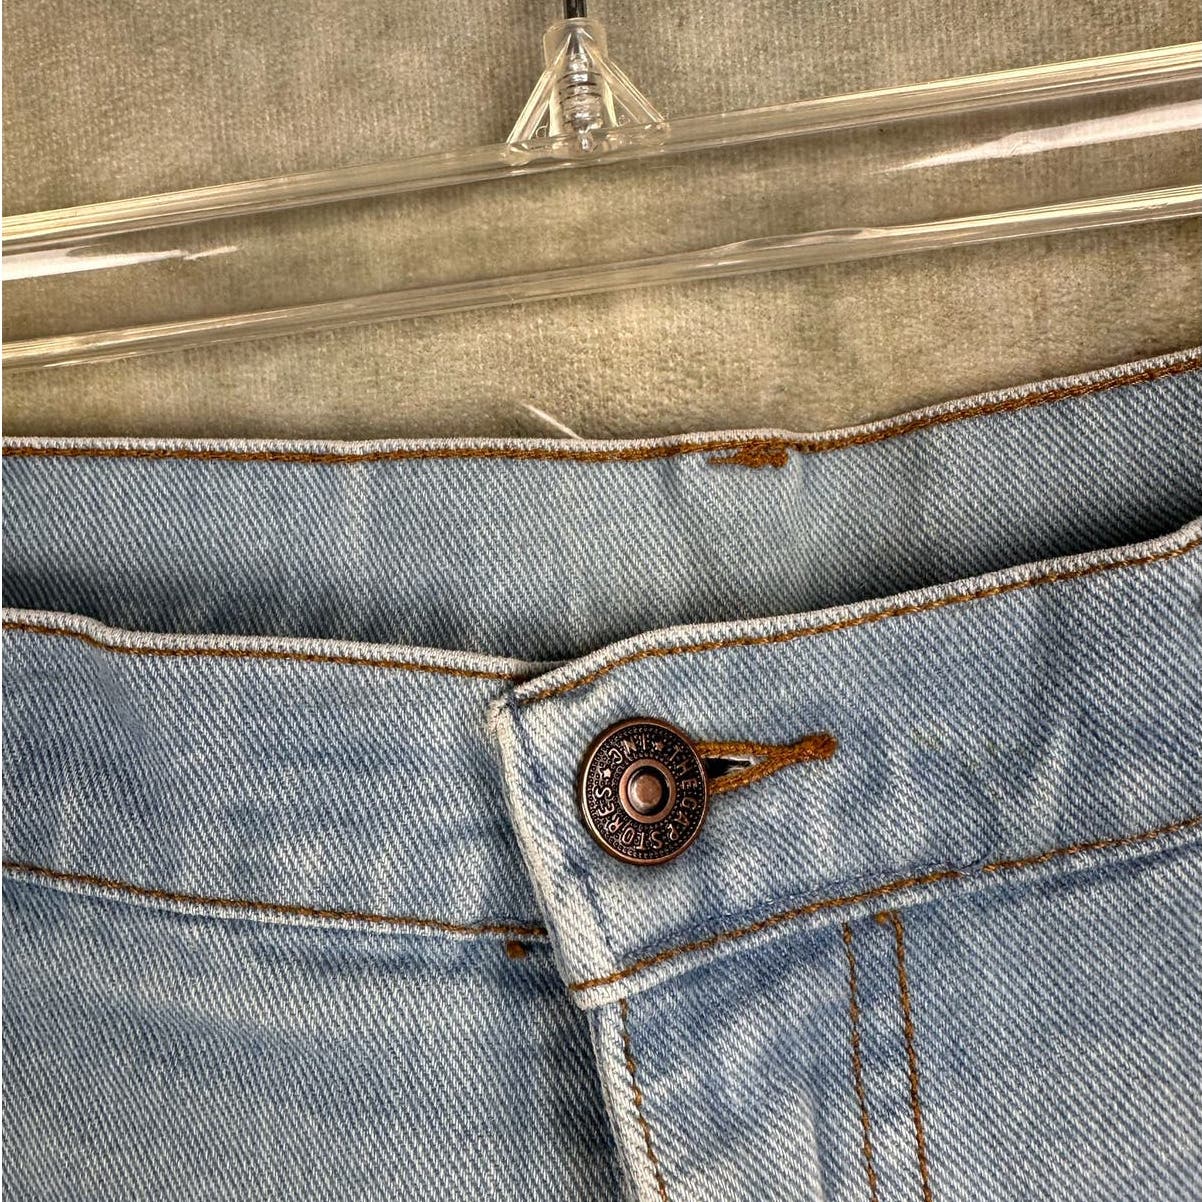 Vintage Gap USA Blue Denim Jeans 36x30